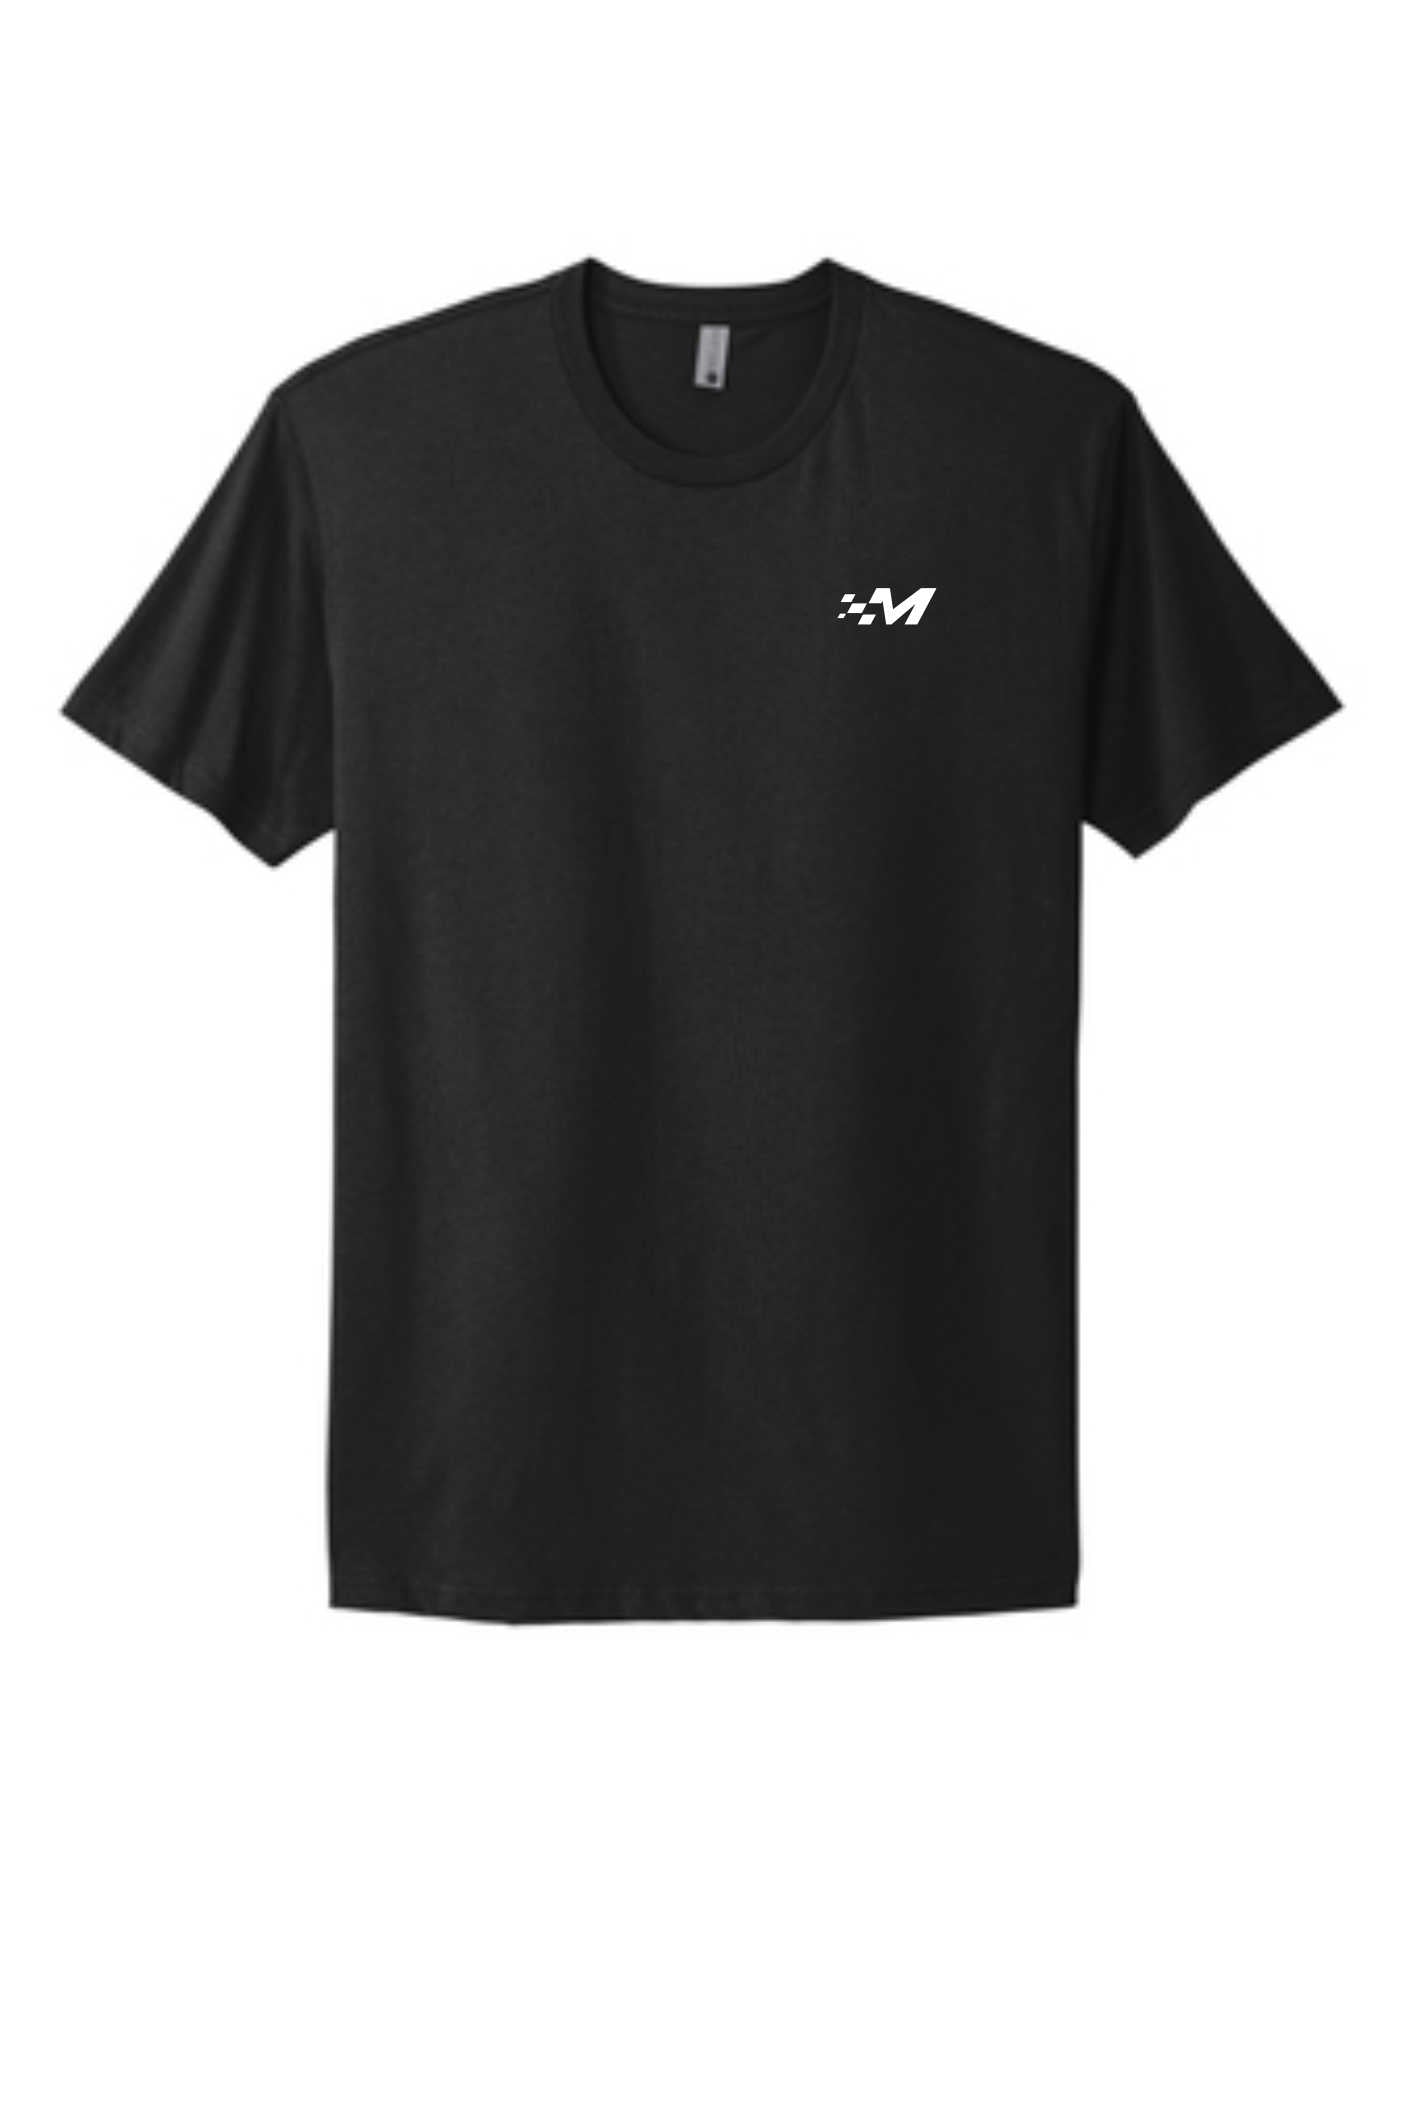 E30 M3 "Generations" 2023 Design - Short Sleeve T-Shirt - Black